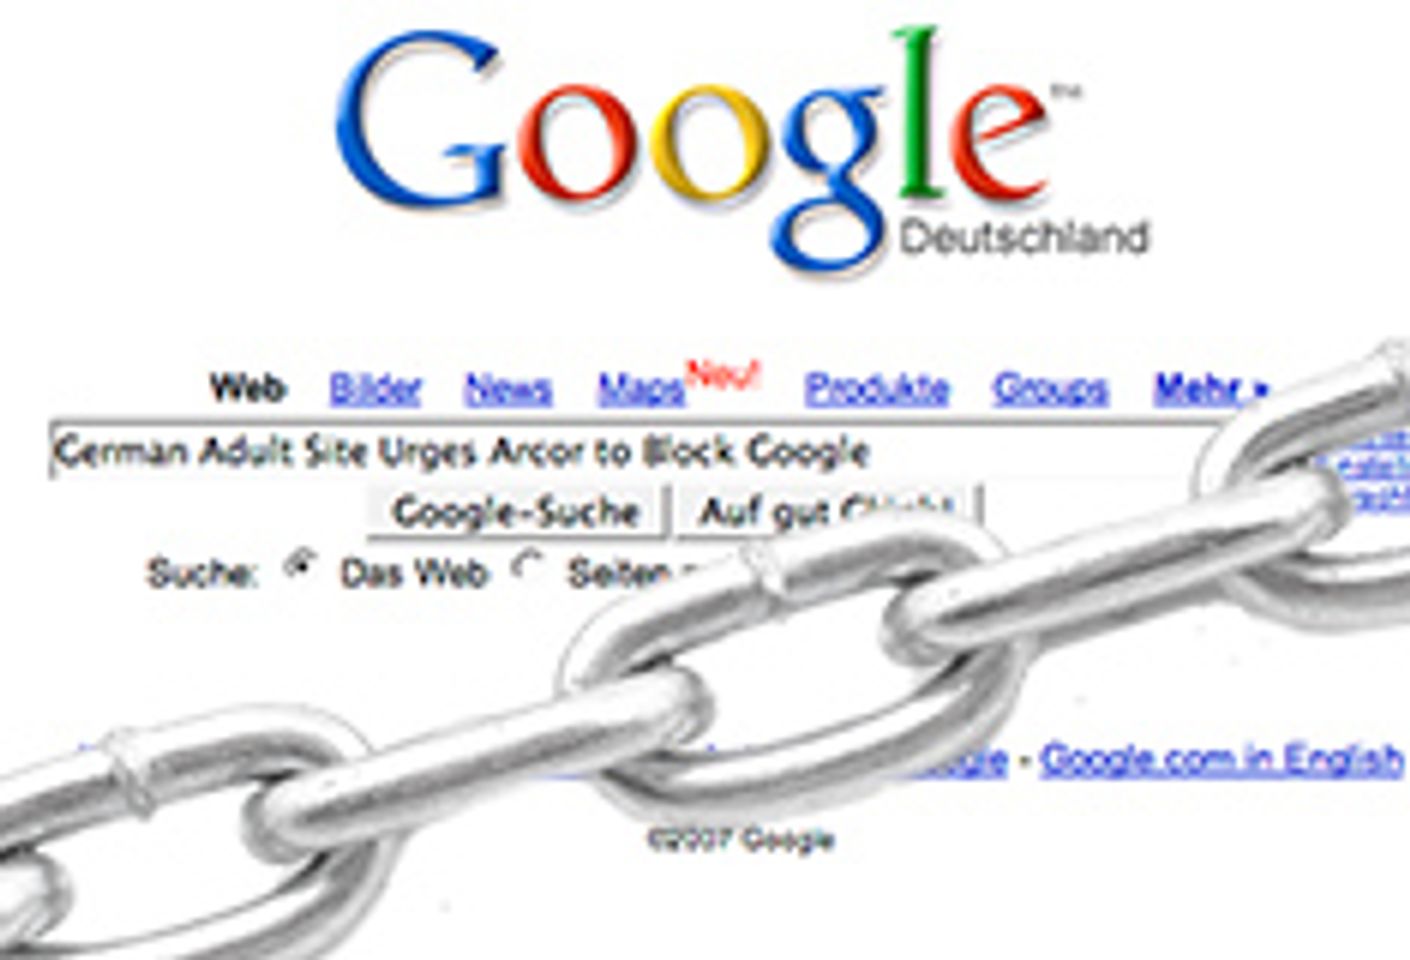 German Adult Site Urges Arcor to Block Google